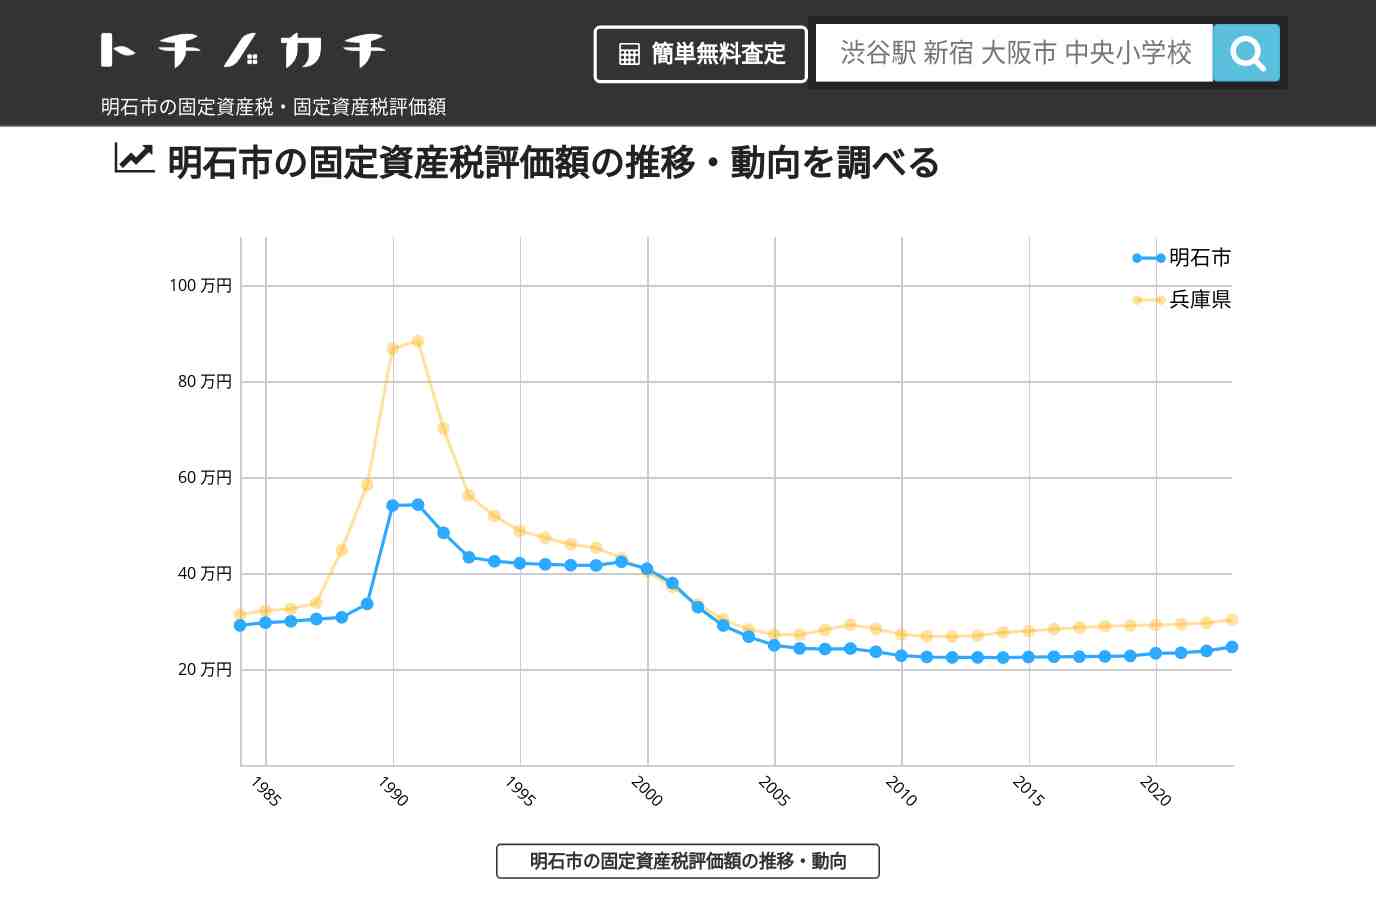 清水小学校(兵庫県 明石市)周辺の固定資産税・固定資産税評価額 | トチノカチ